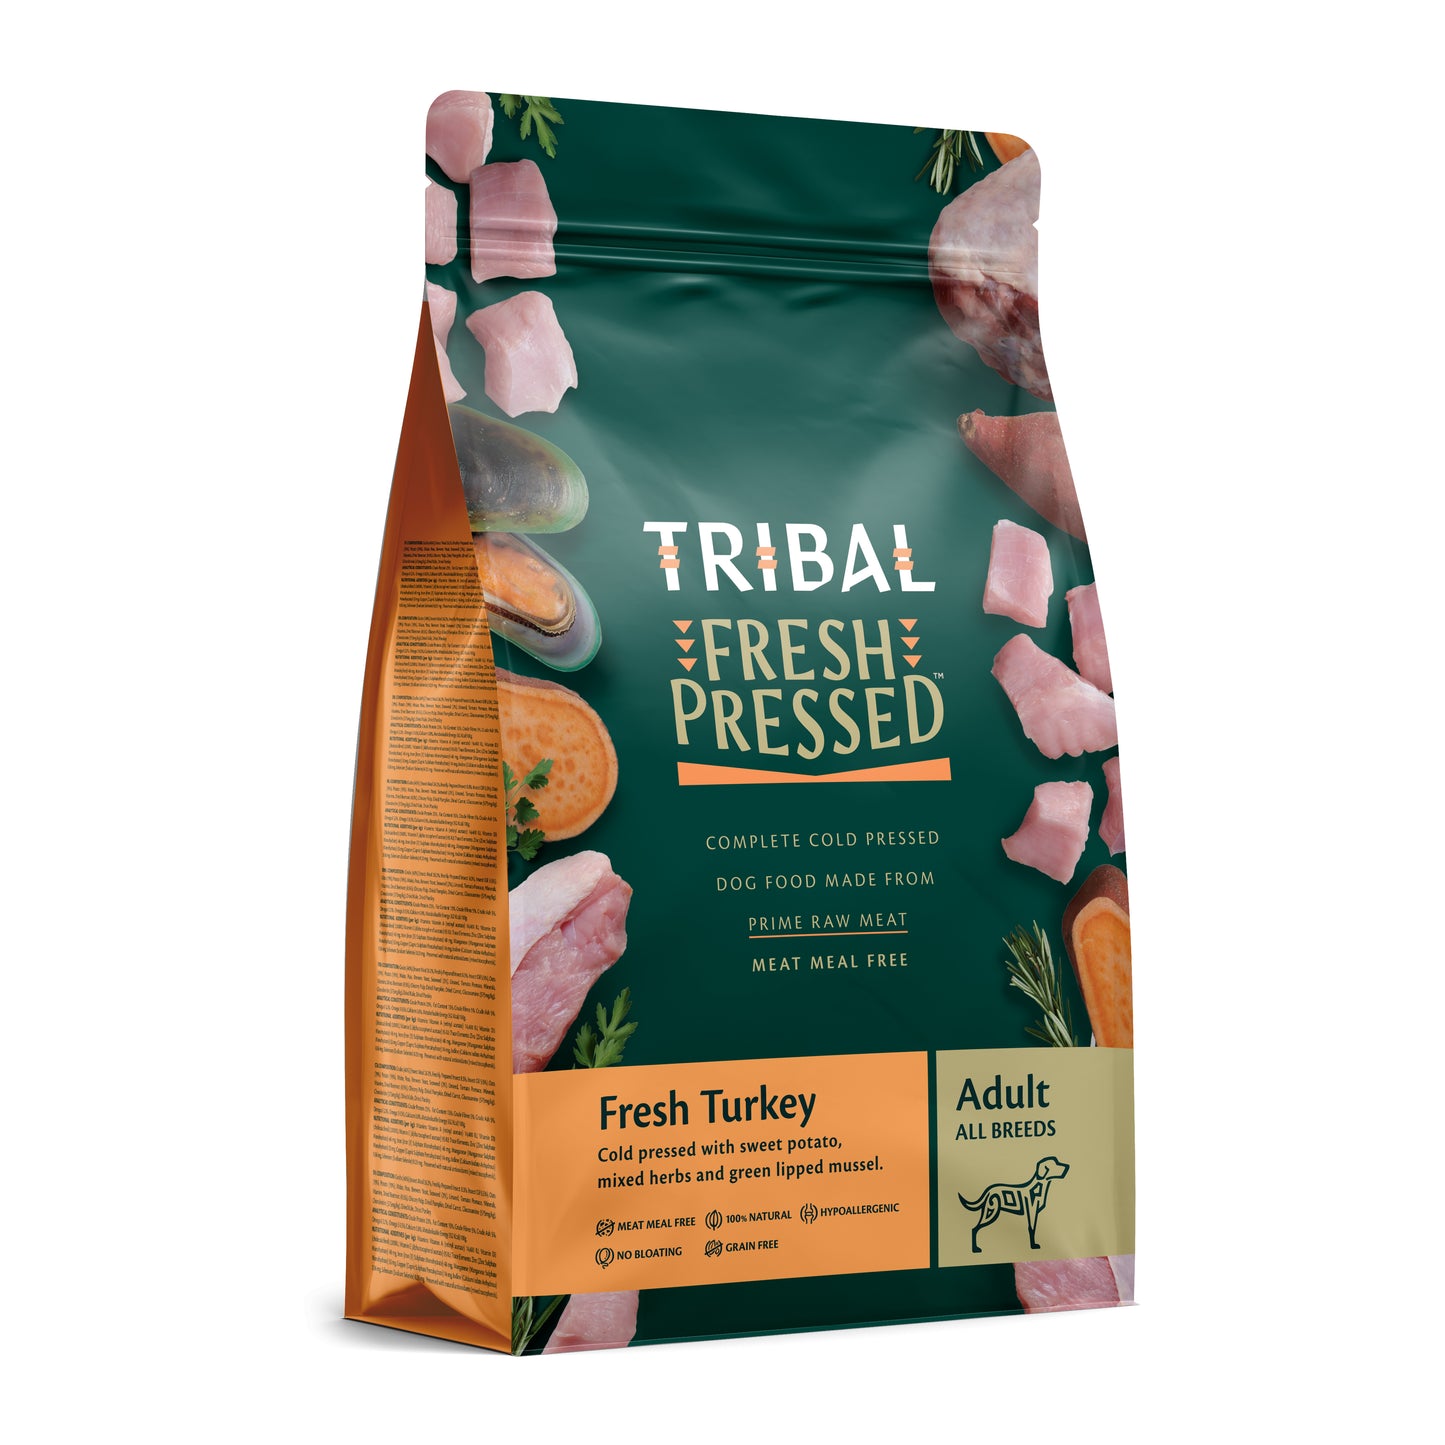 Tribal Fresh Pressed Adult Turkey